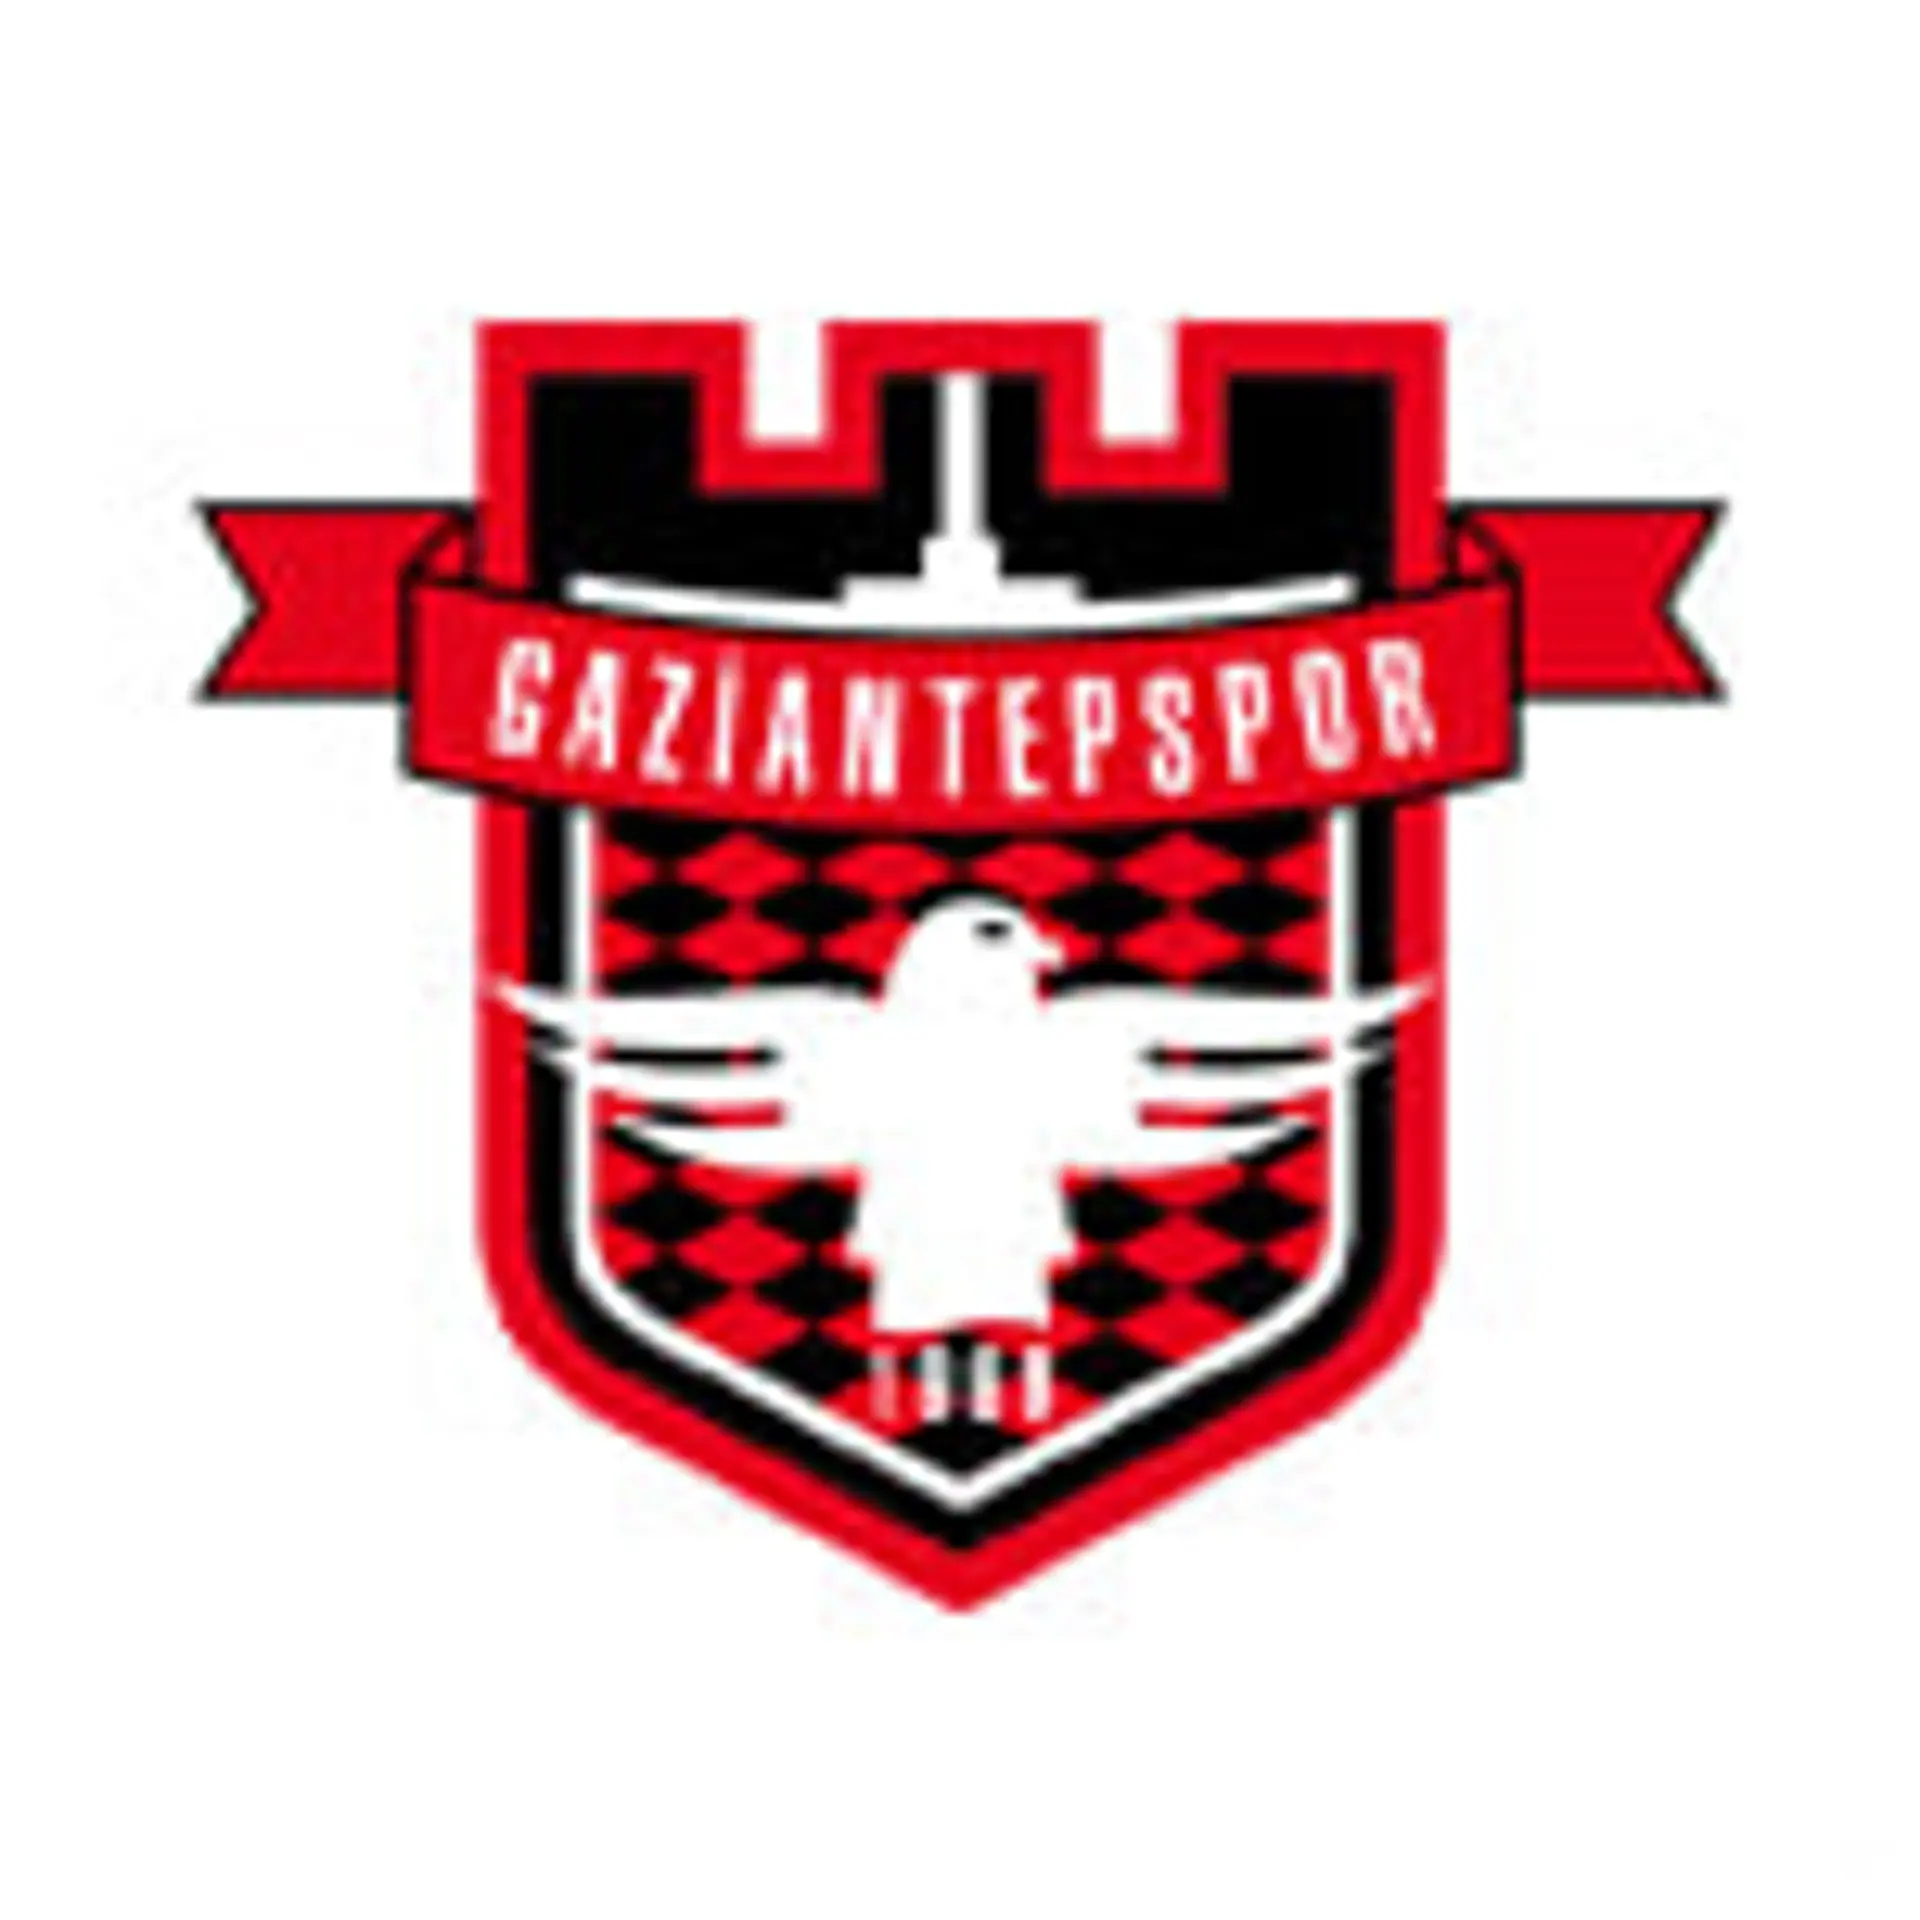 Gaziantepspor Fans 